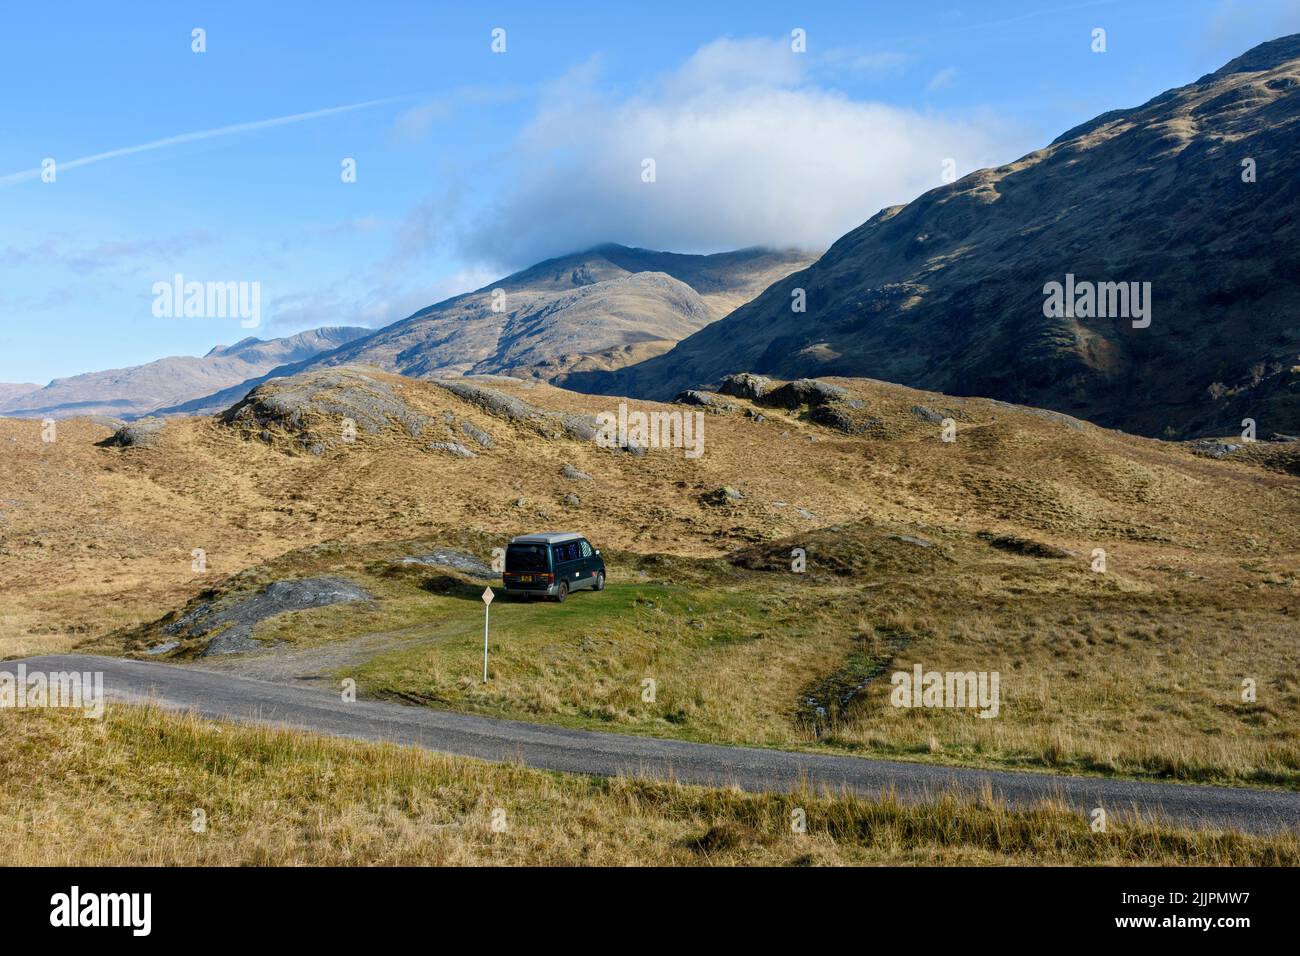 Buidhe Bheinn from near Loch an Doire Duibh, above Kinloch Hourn, Highland Region, Scotland, UK.  Mazda Bongo campervan in foreground. Stock Photo